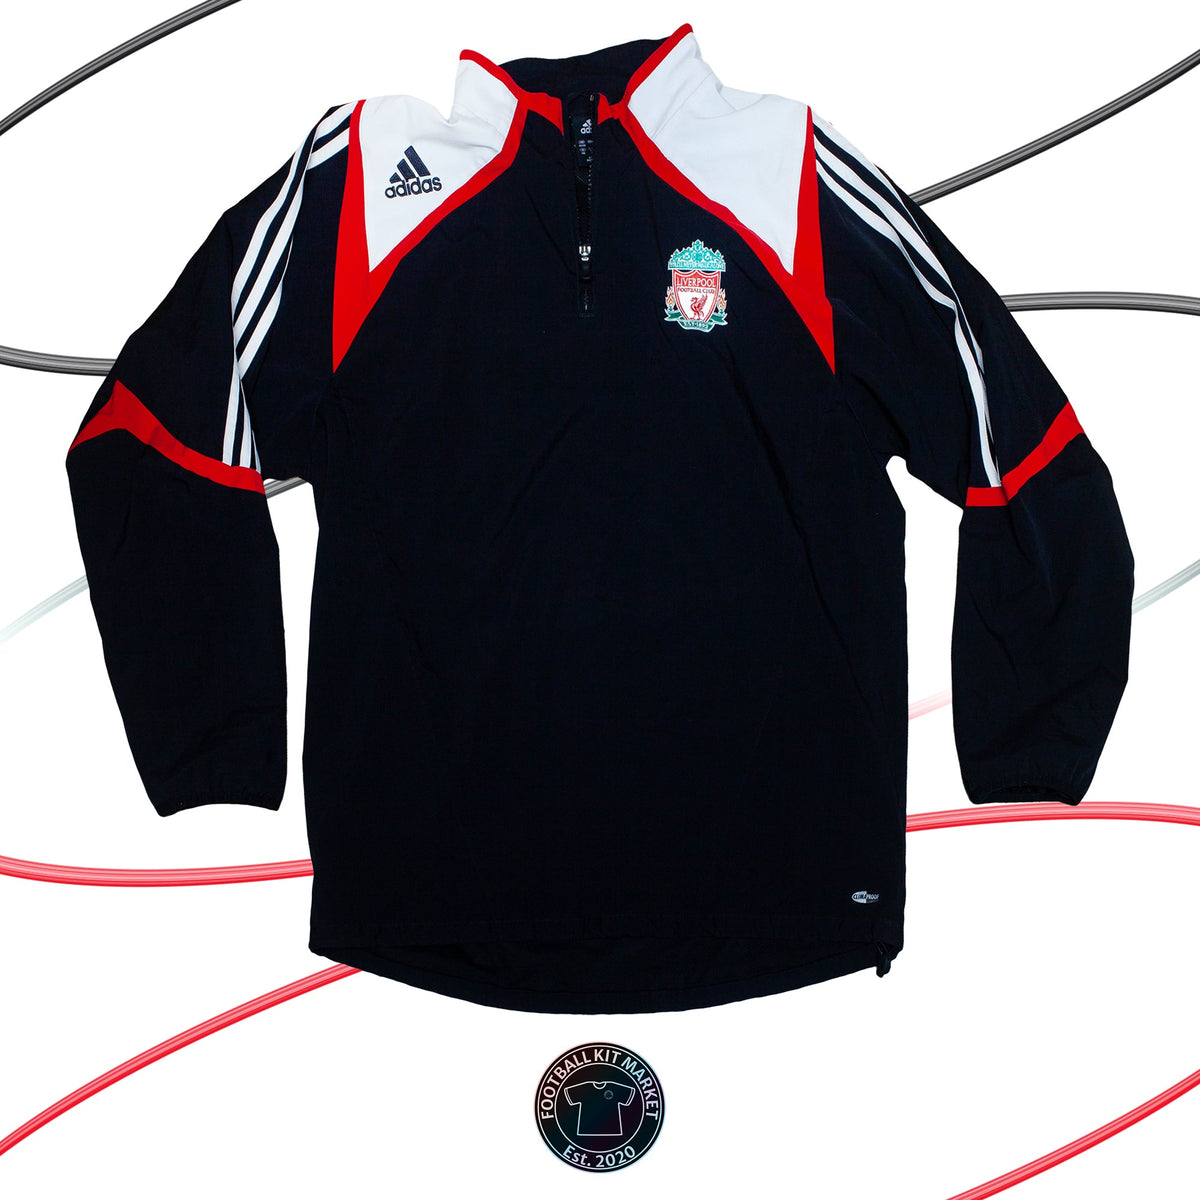 Genuine LIVERPOOL Jacket (2007-2008) - ADIDAS (XXL) - Product Image from Football Kit Market